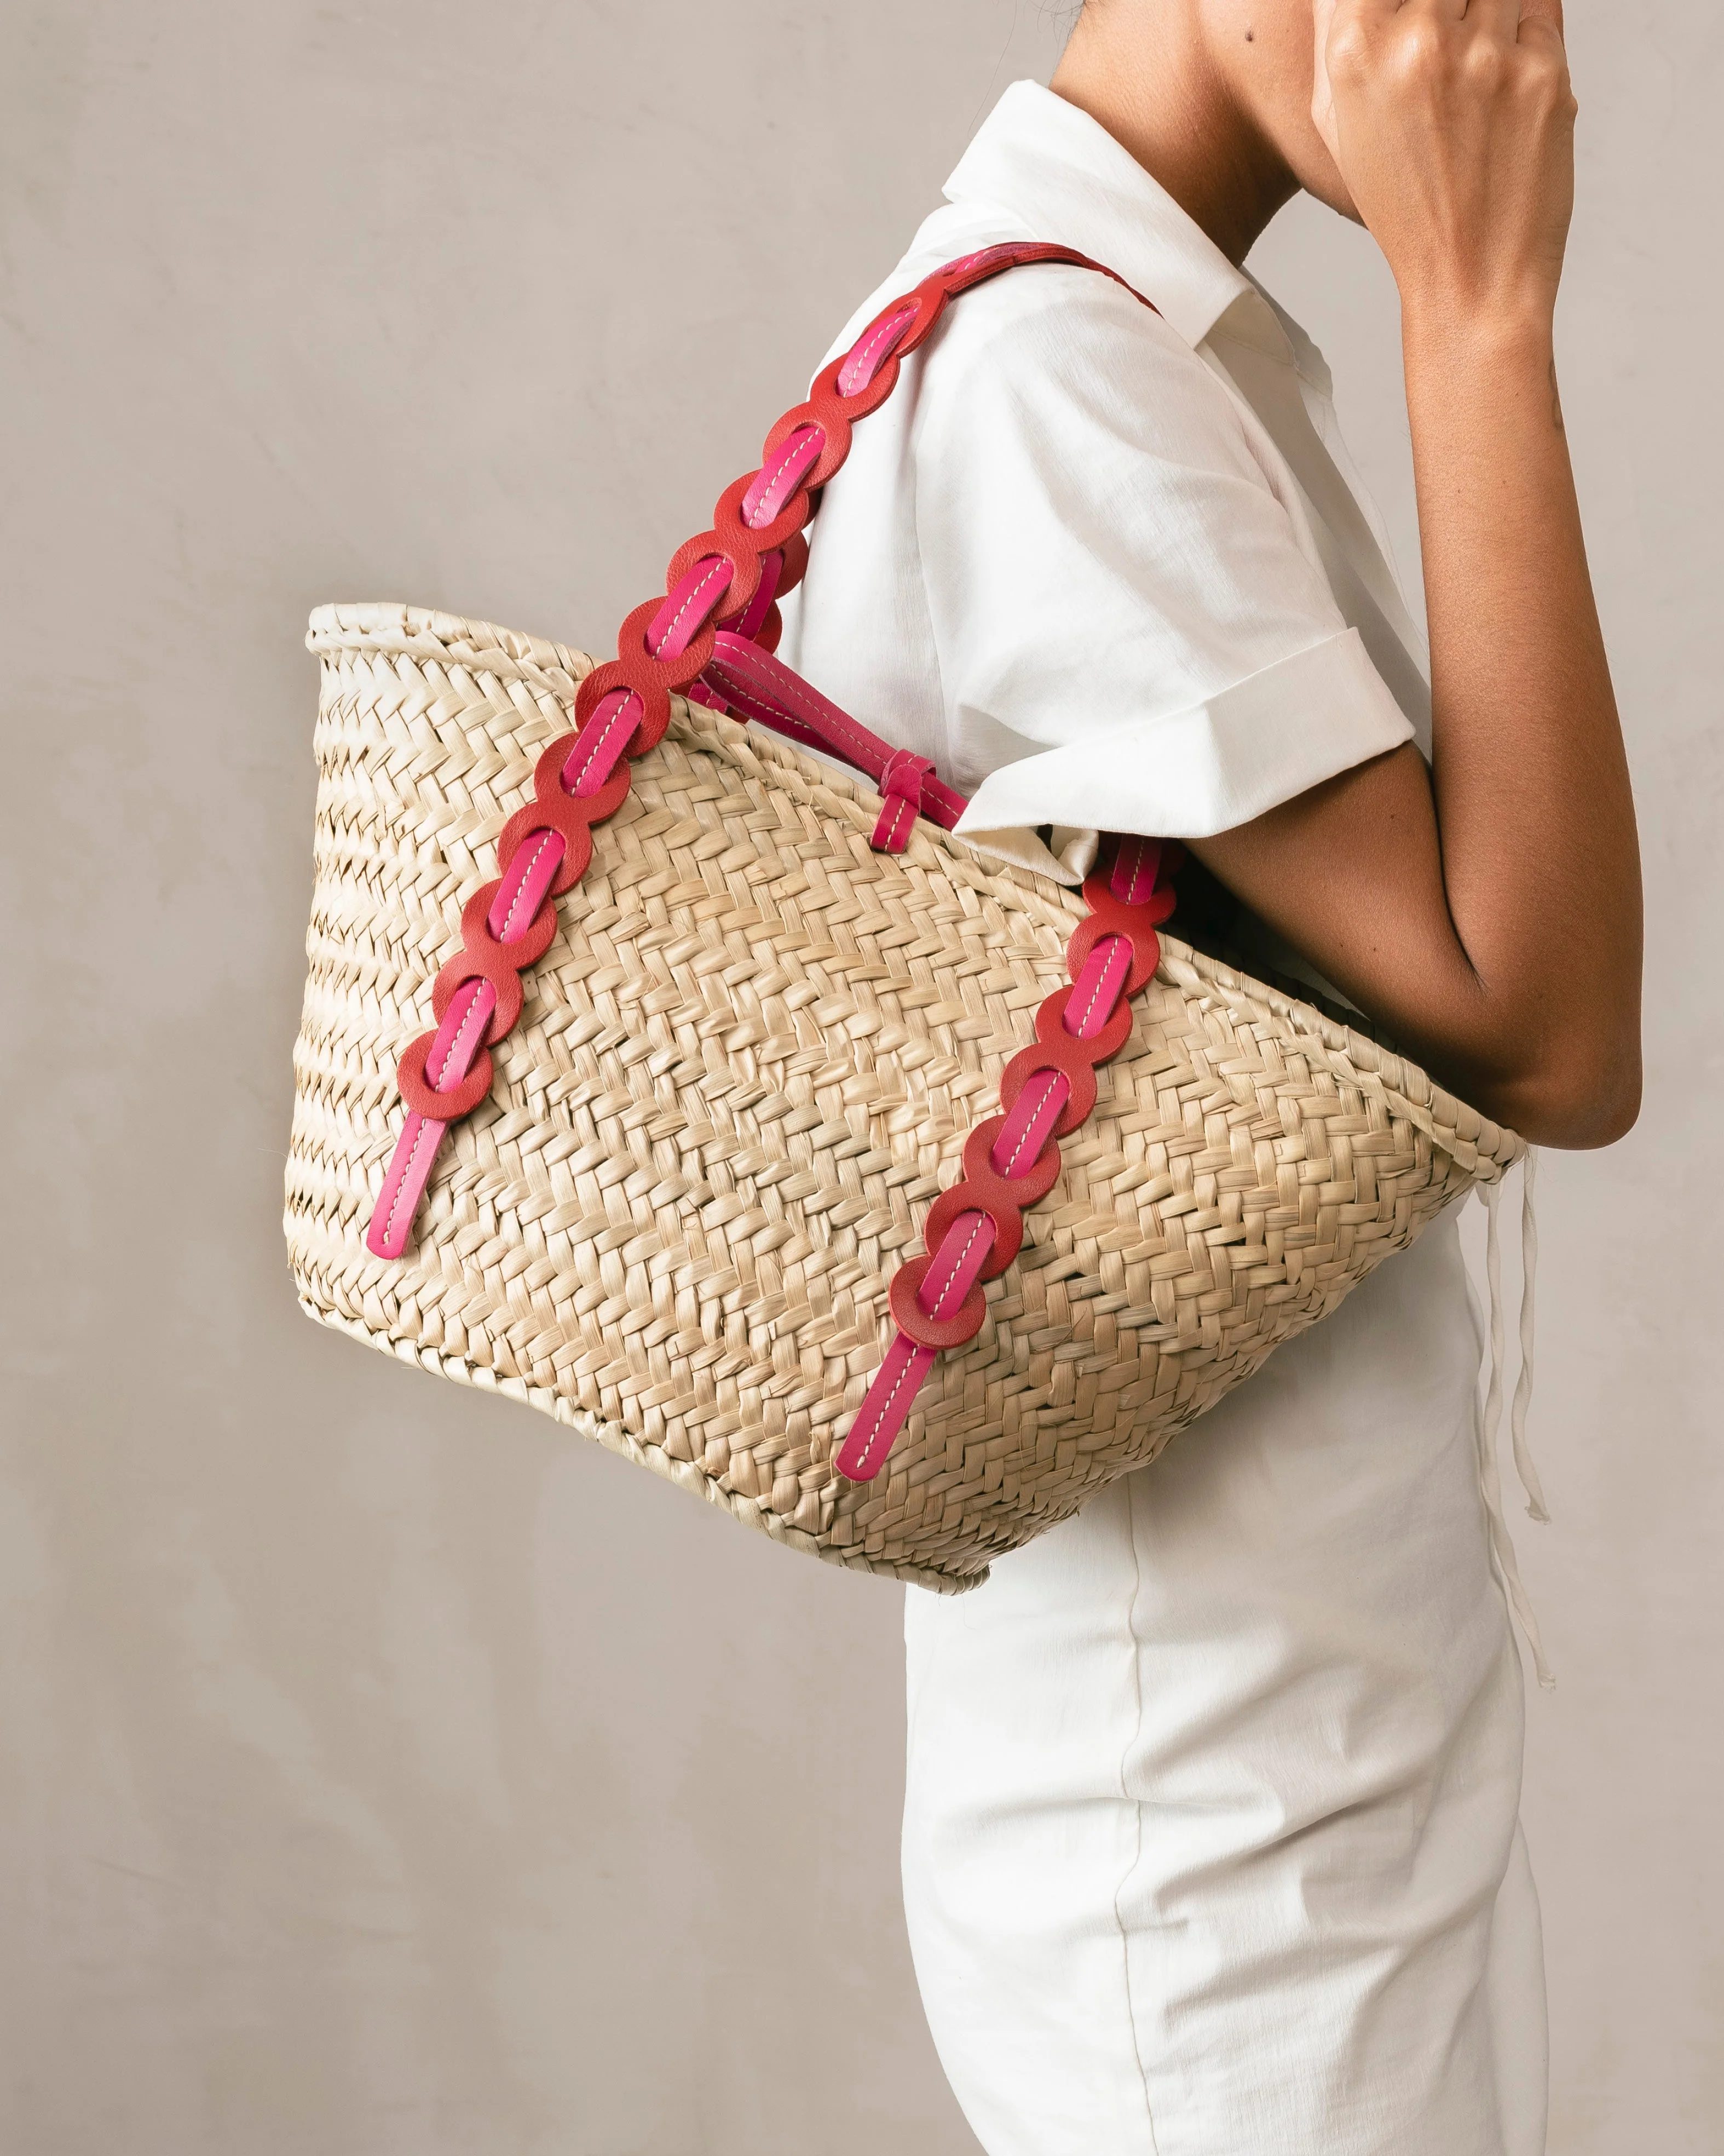 Alohas – Palmette – Red and Pink Leather Straw Bag à 125,00 € chez Alohas